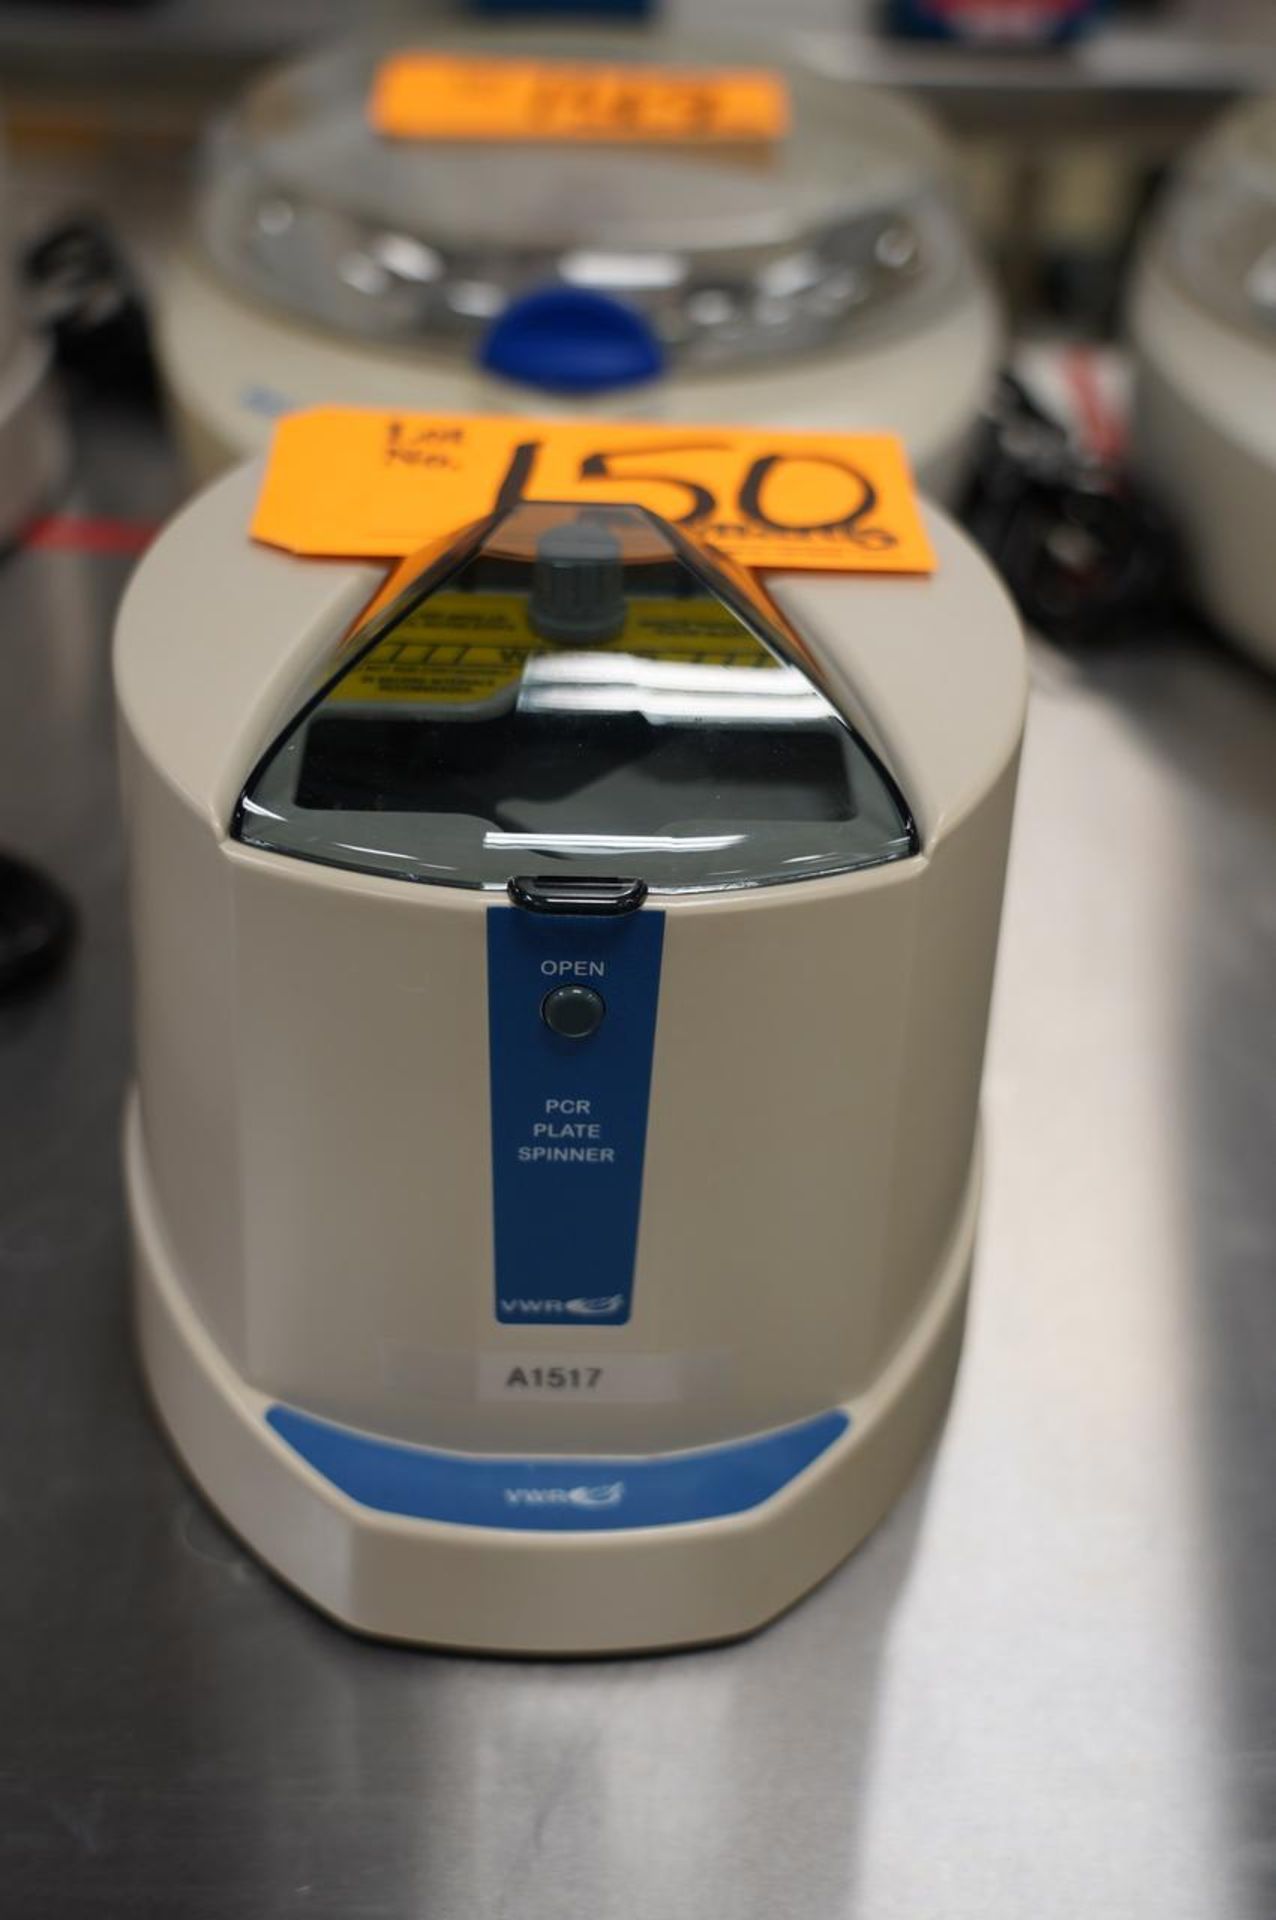 VWR 89184-608 PCR Plate Spinner